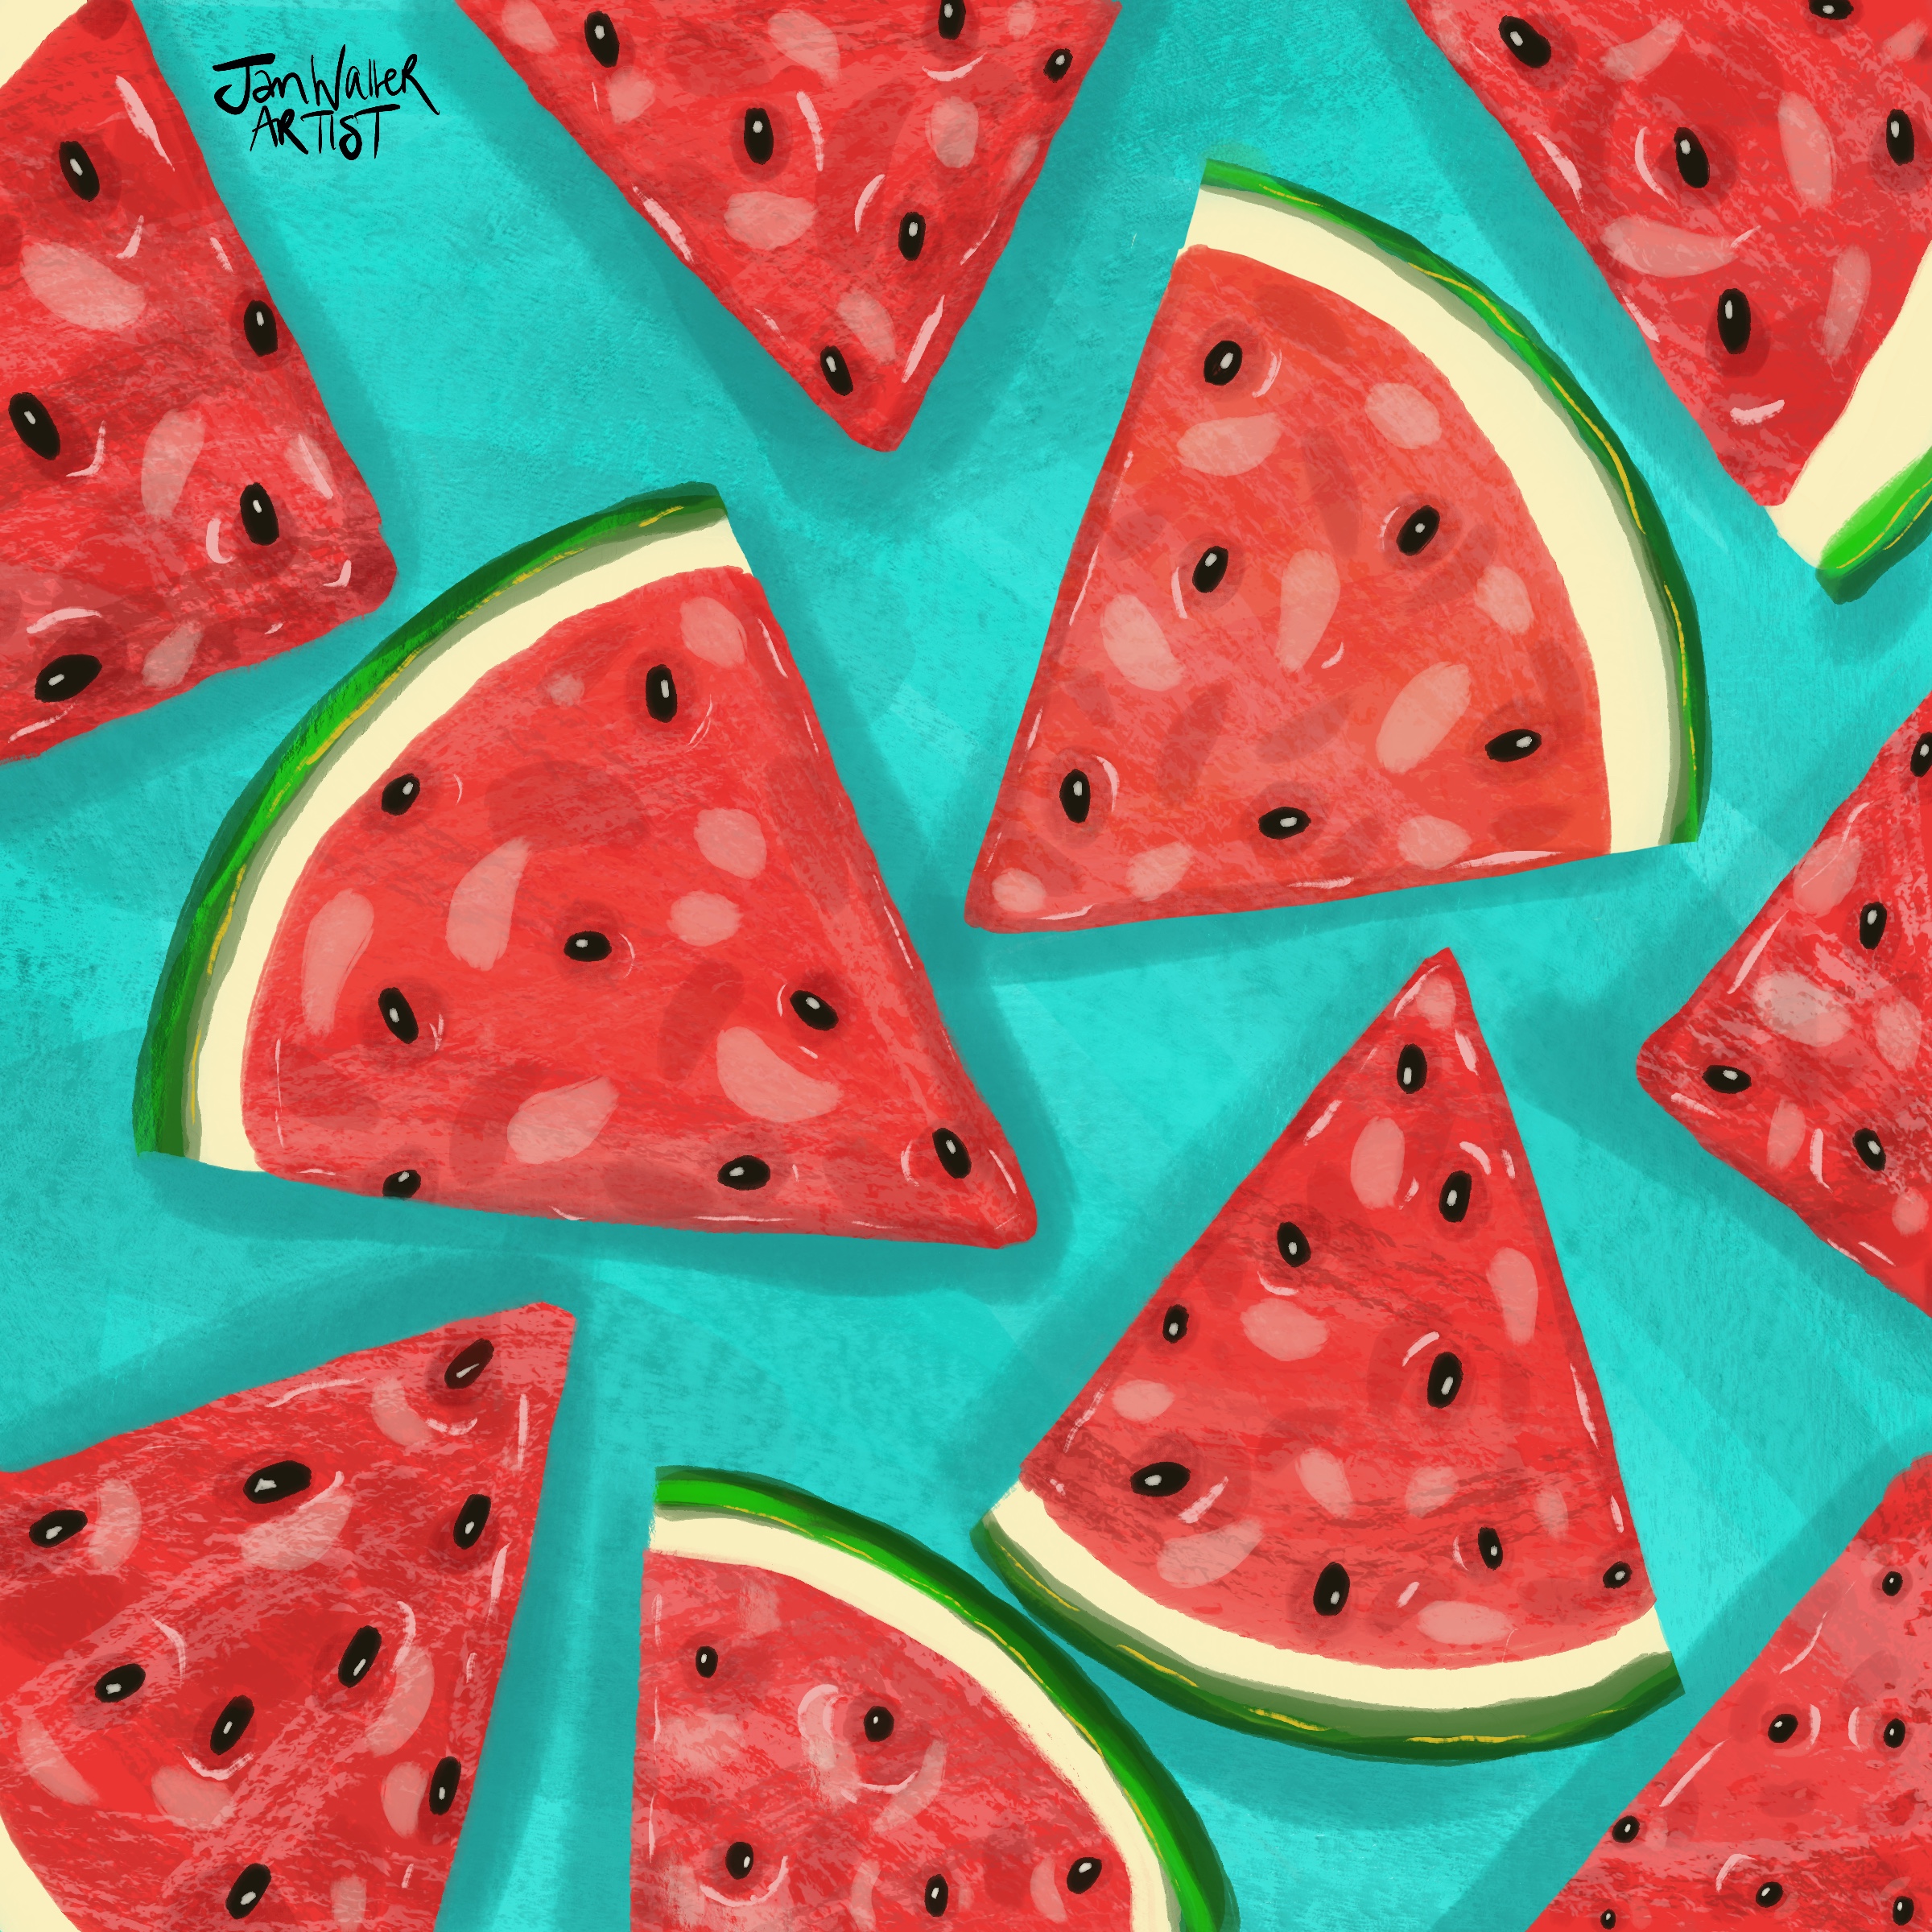 Watermelon pattern design